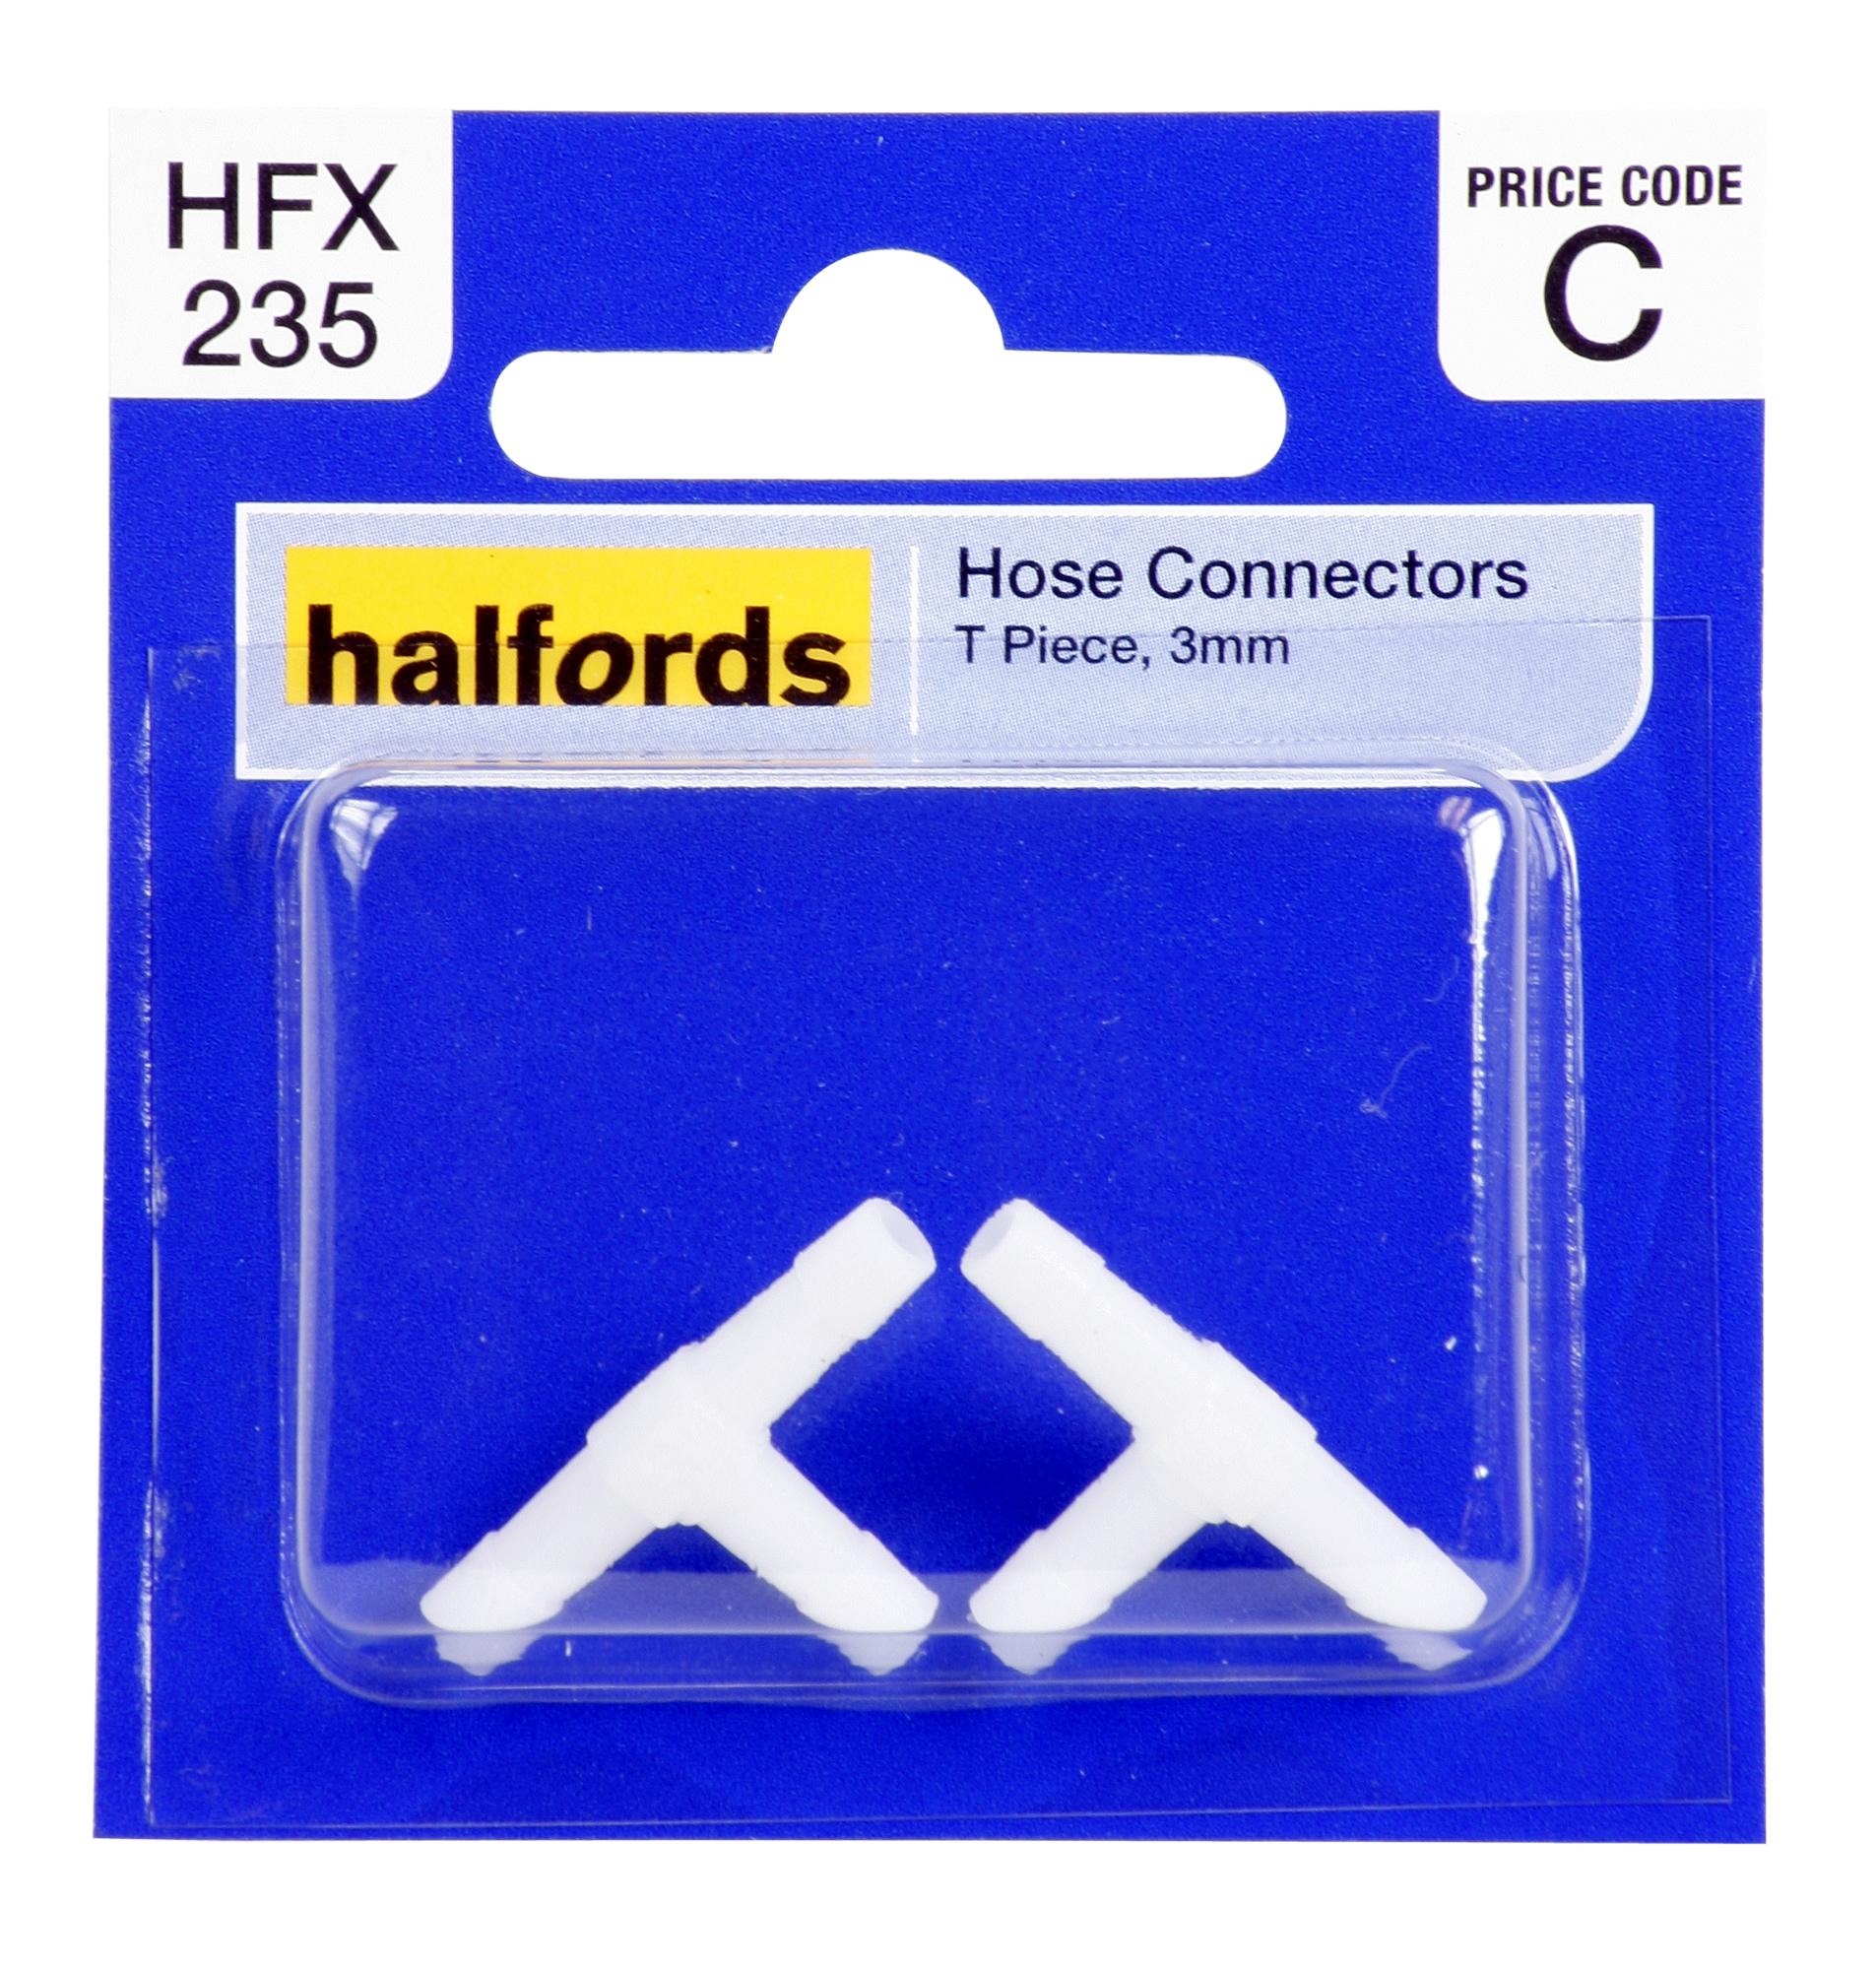 Halfords Hose Connectors 3Mm T Piece Hfx235